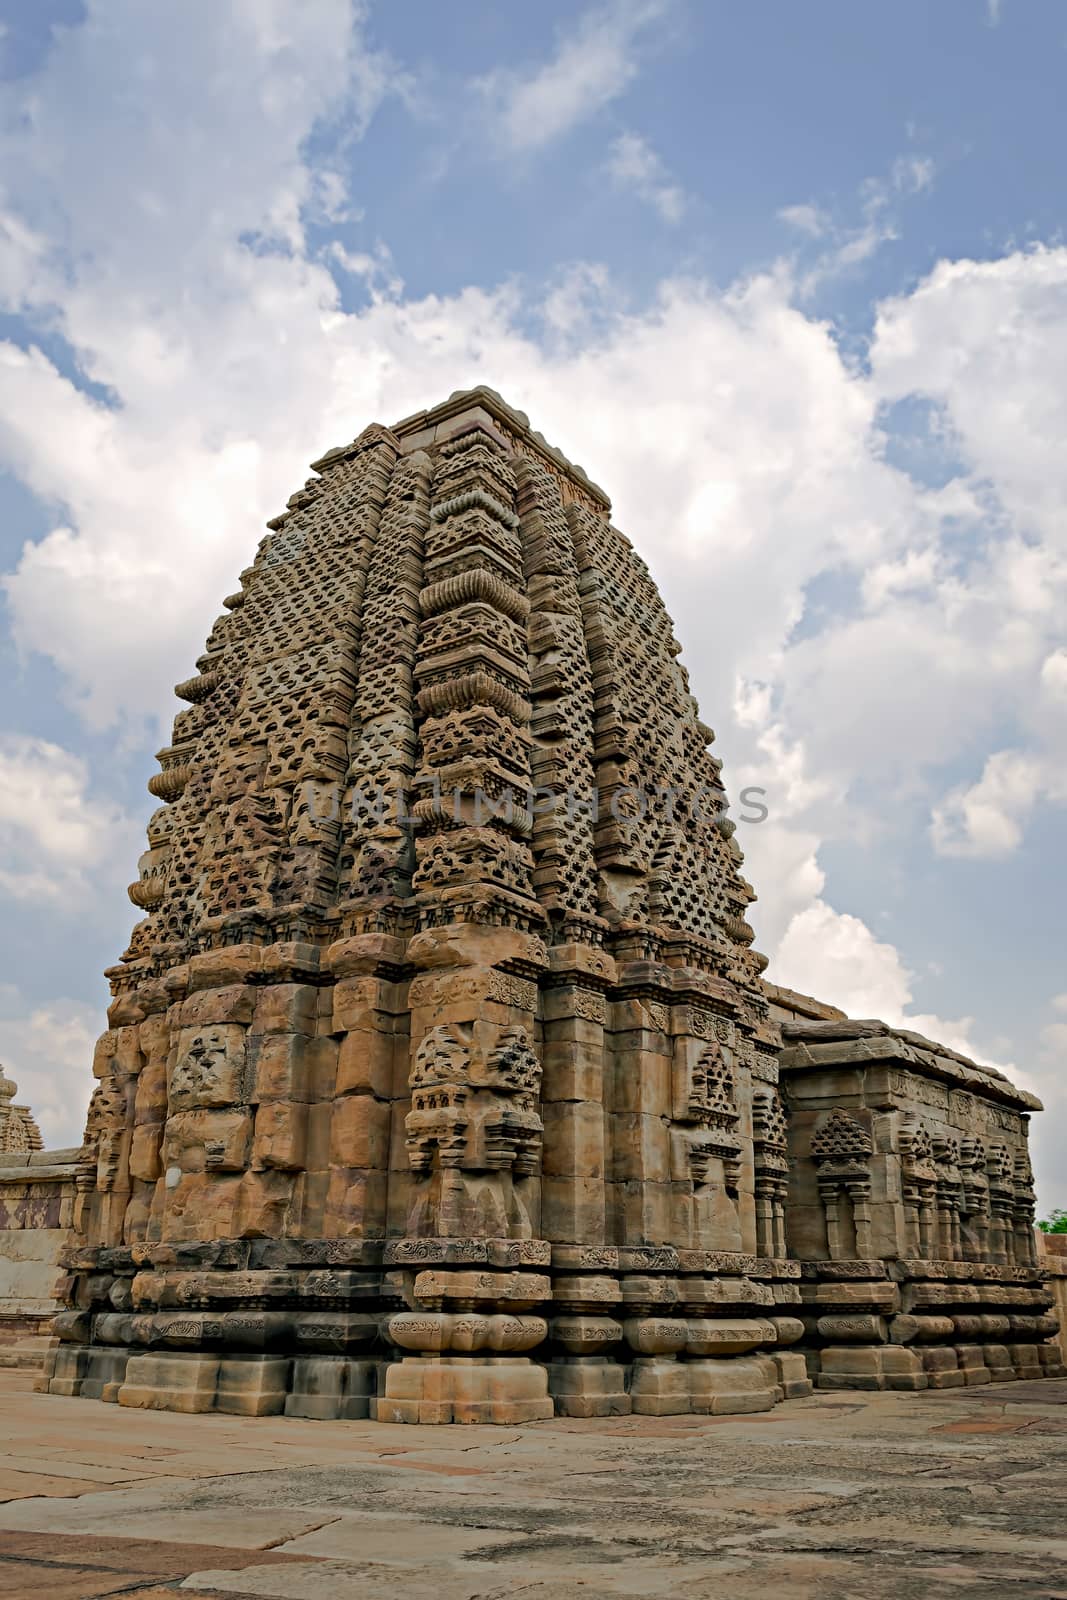 Stone carved ancient Virupaksha temple with intricate carvings at, Pattadakal, Karnataka, India.